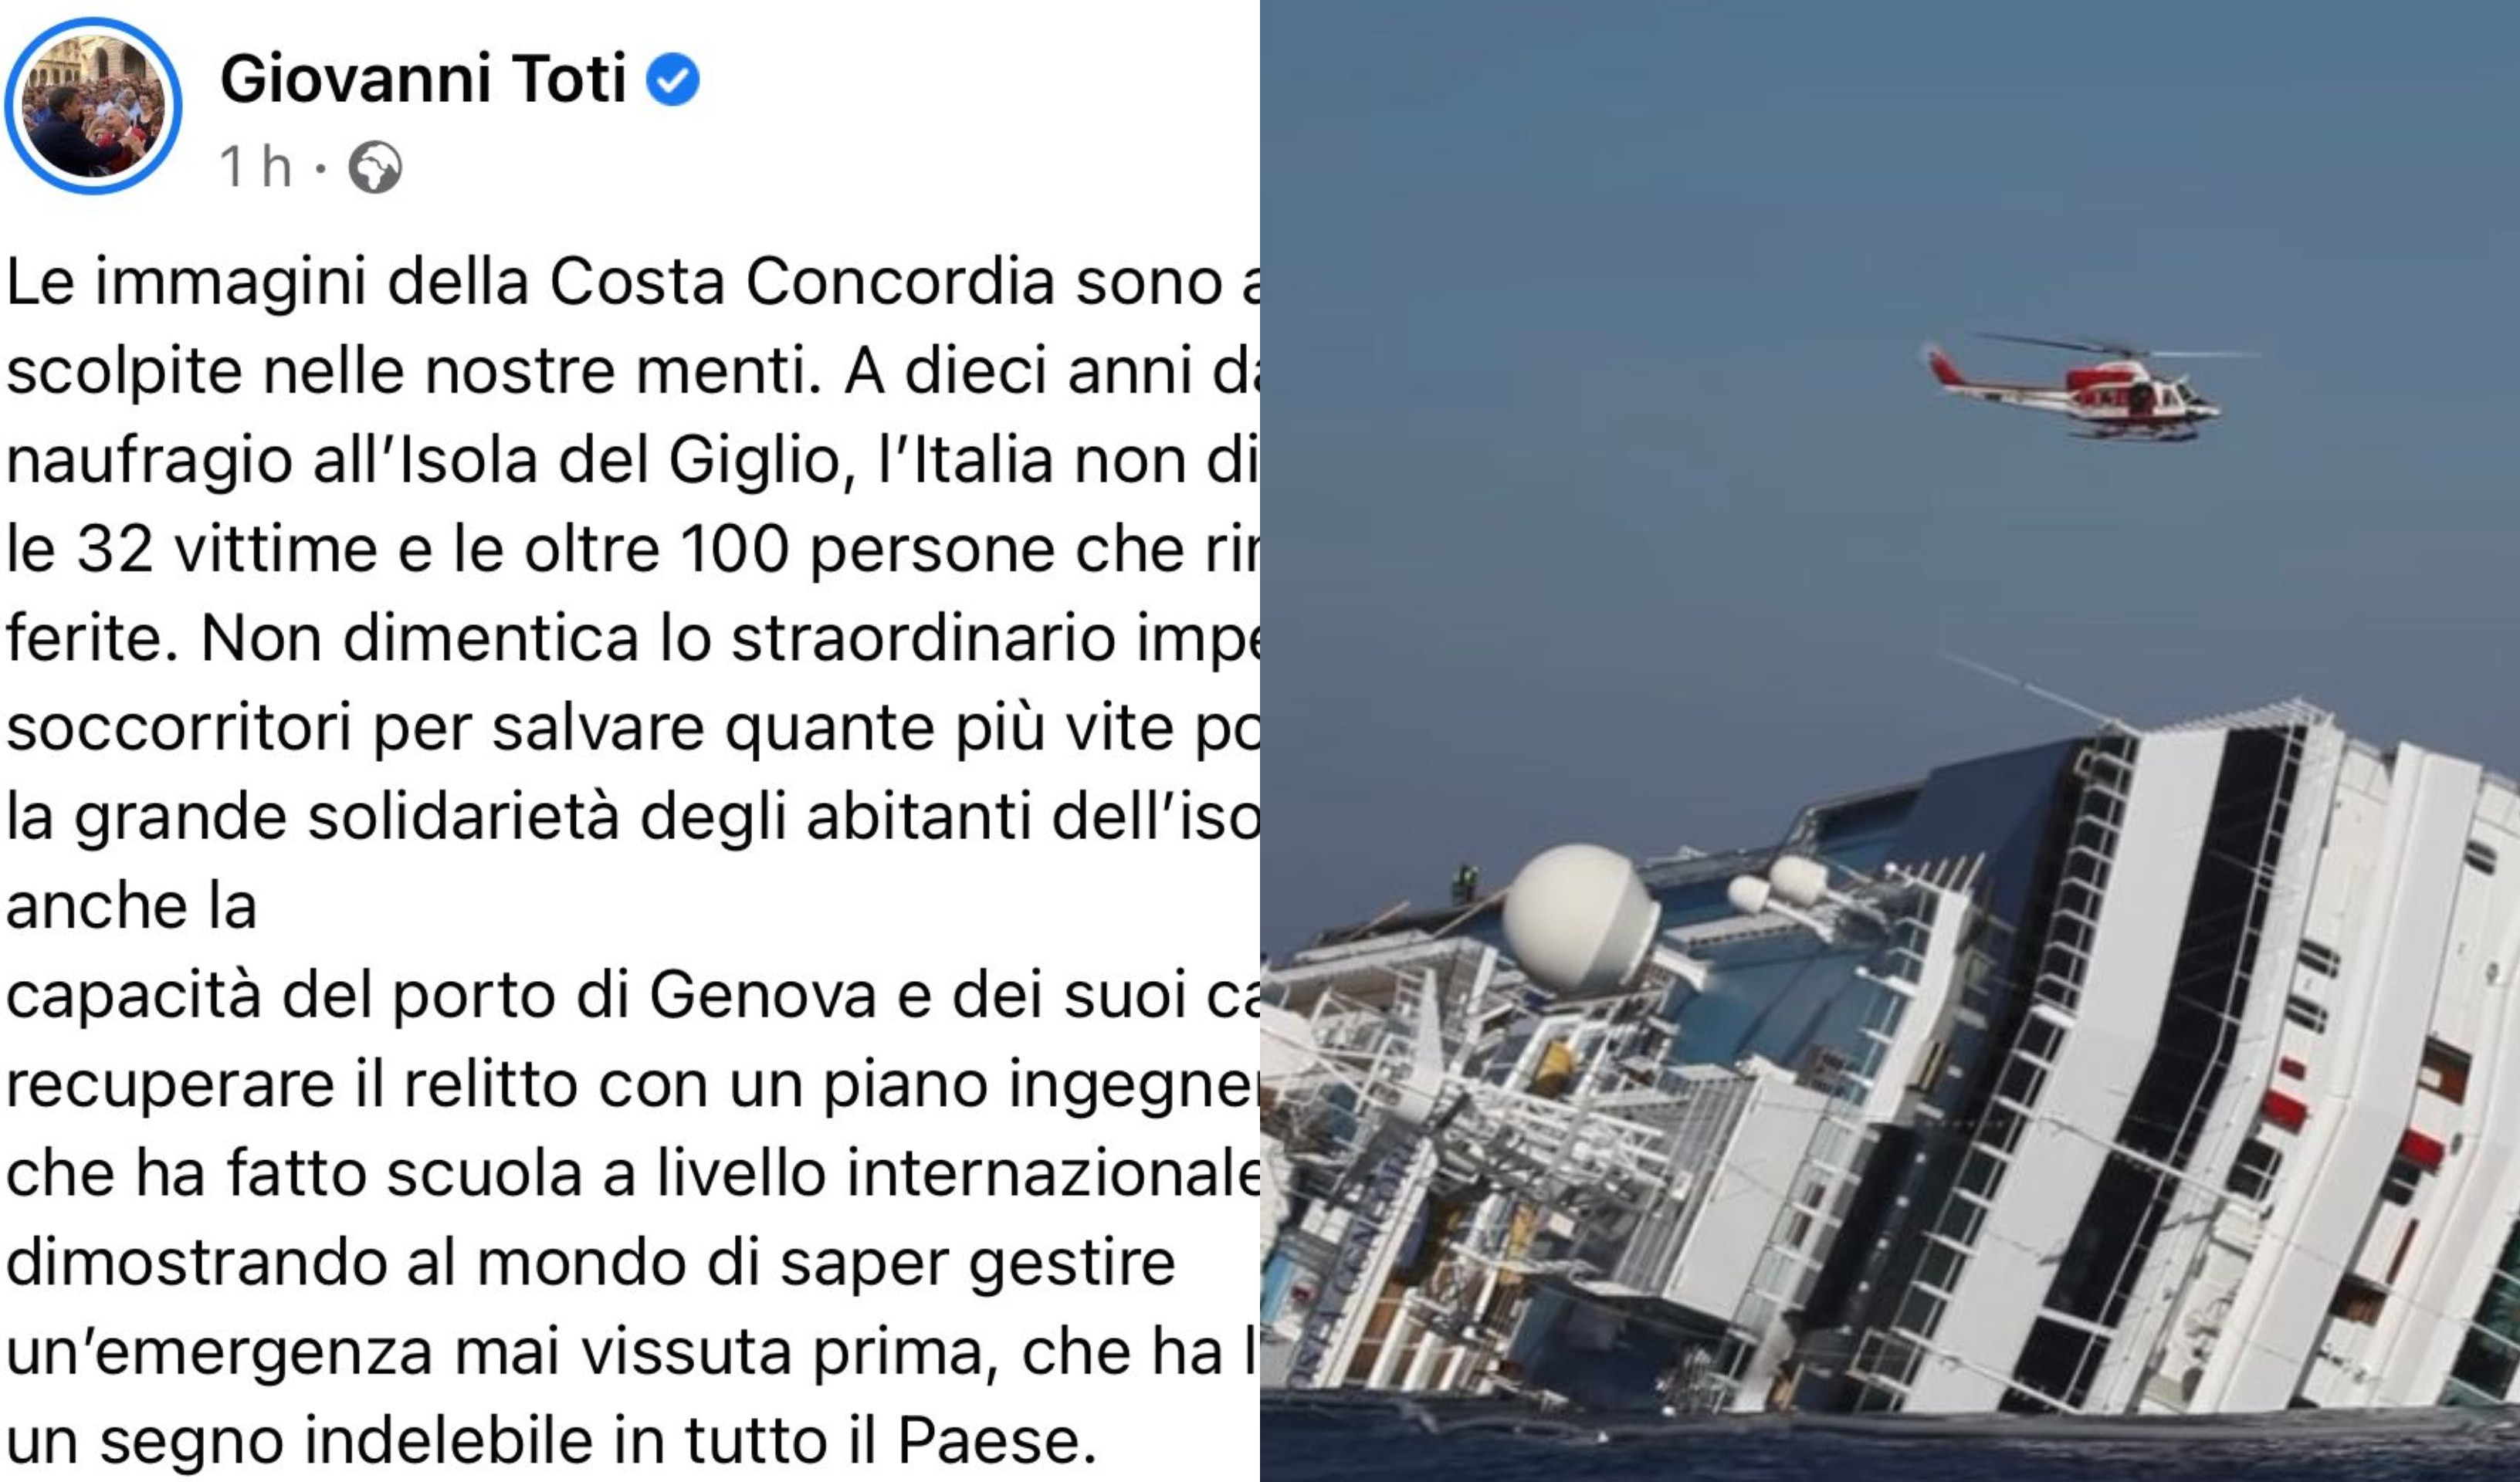 Disastro Concordia, Toti: 